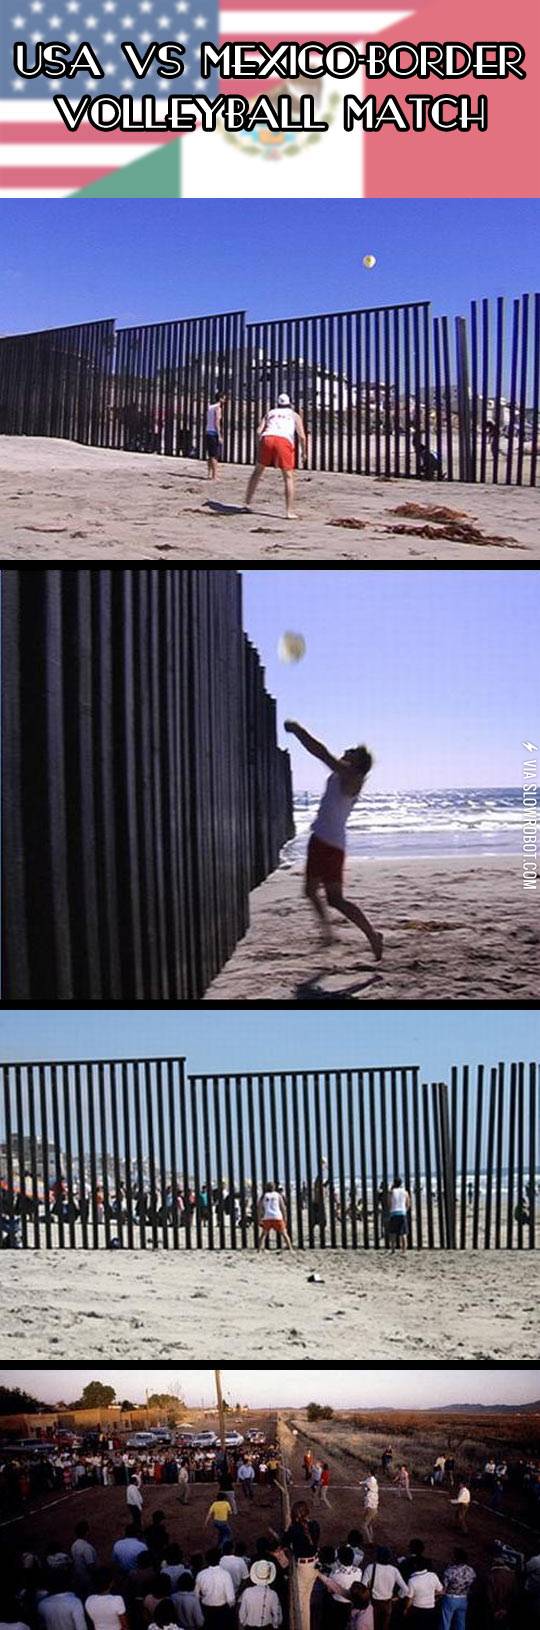 USA+vs.+Mexico+border+volleyball+match.